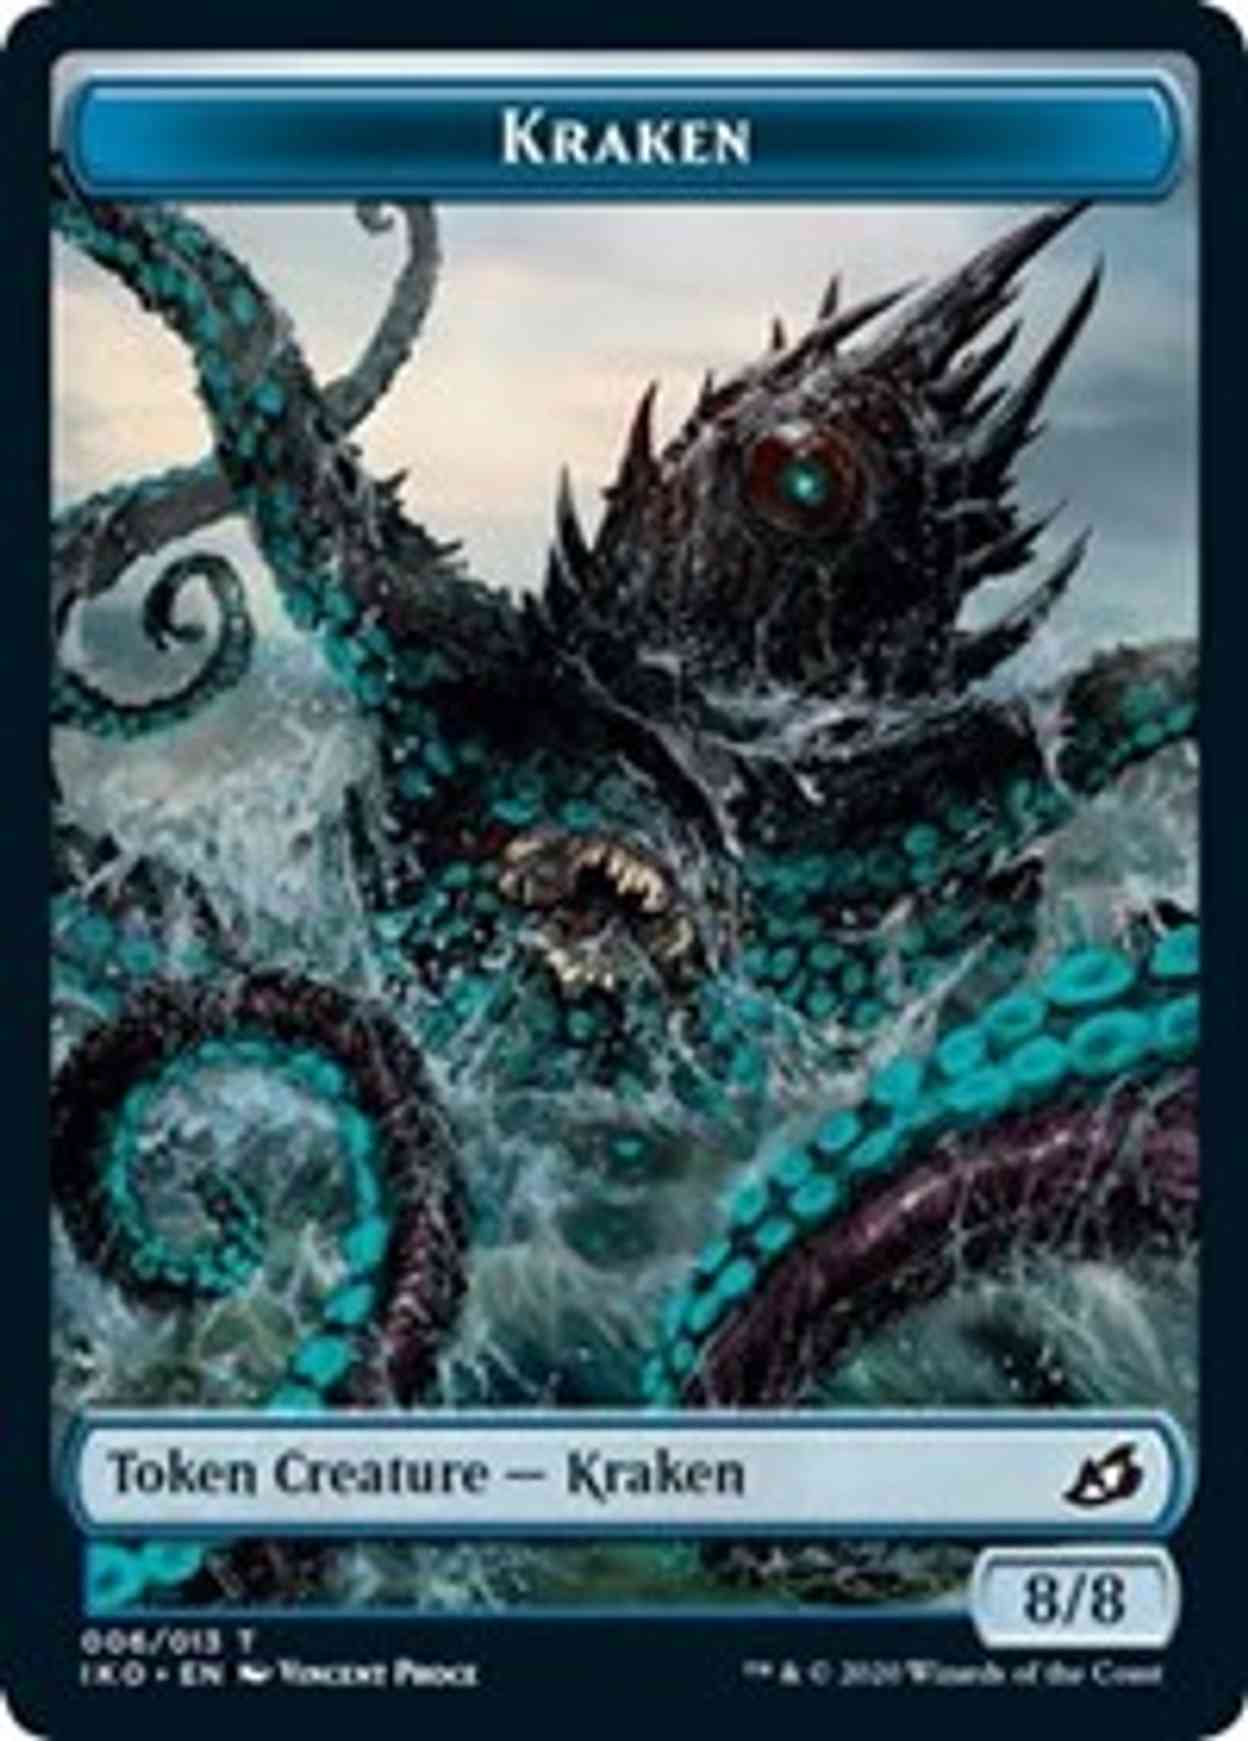 Kraken // Elemental (010) Double-sided Token magic card front